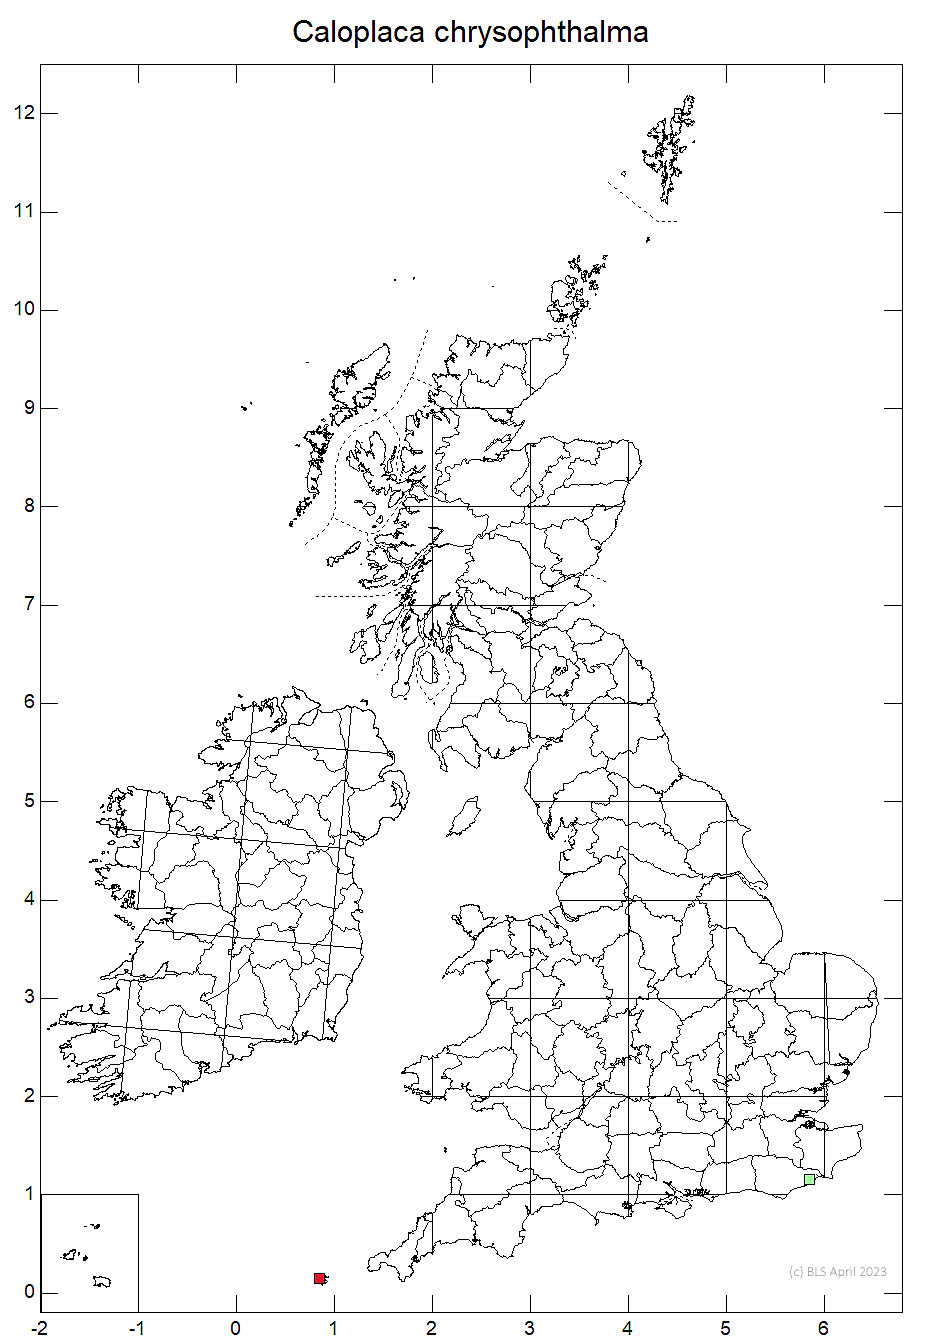 Caloplaca chrysophthalma 10km sq distribution map